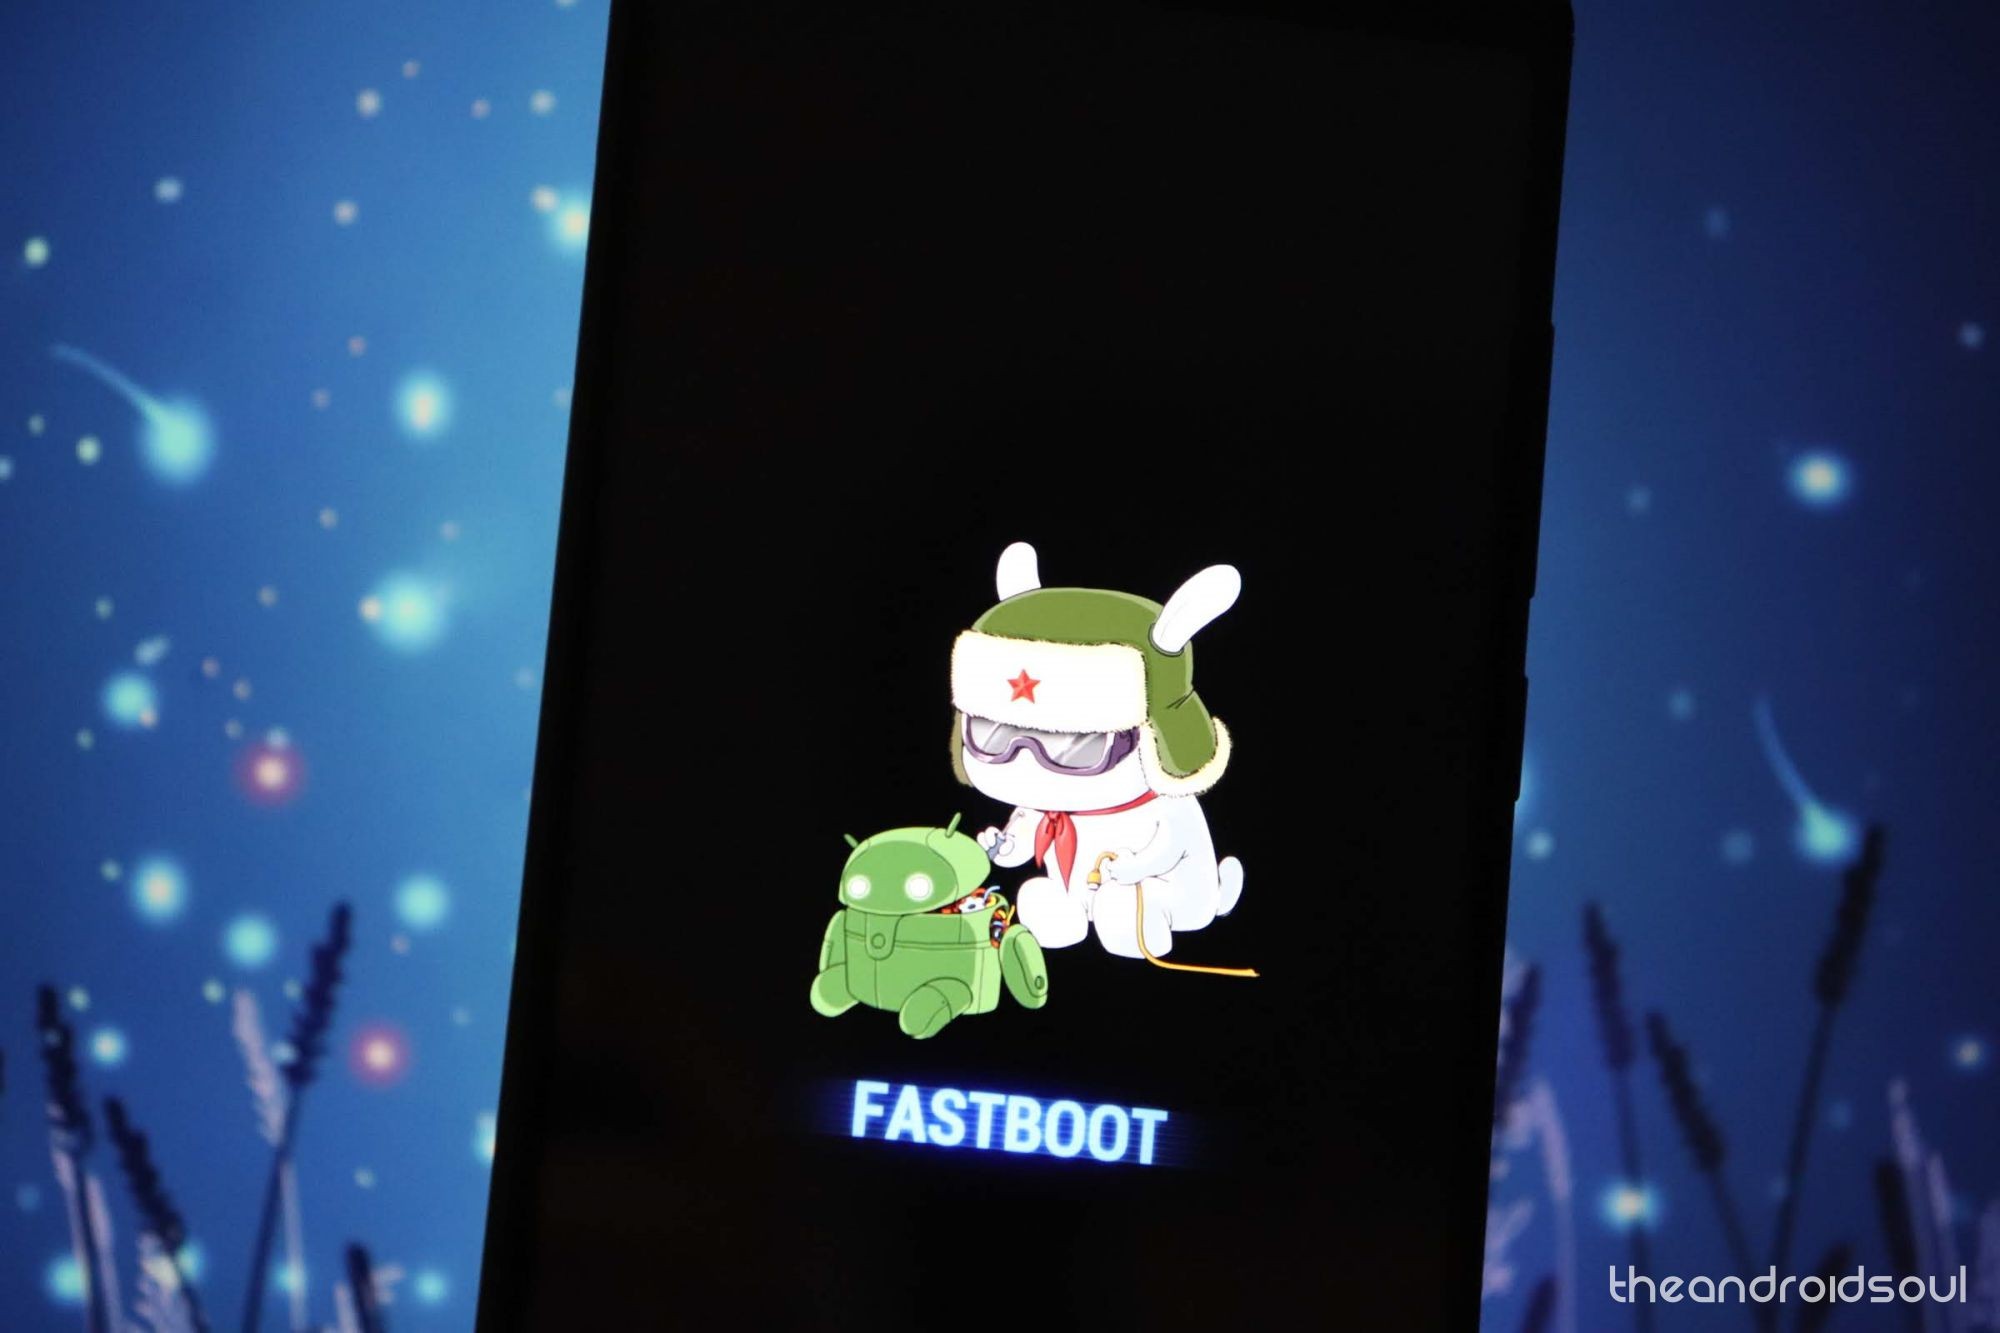 Xiaomi 9c Fastboot